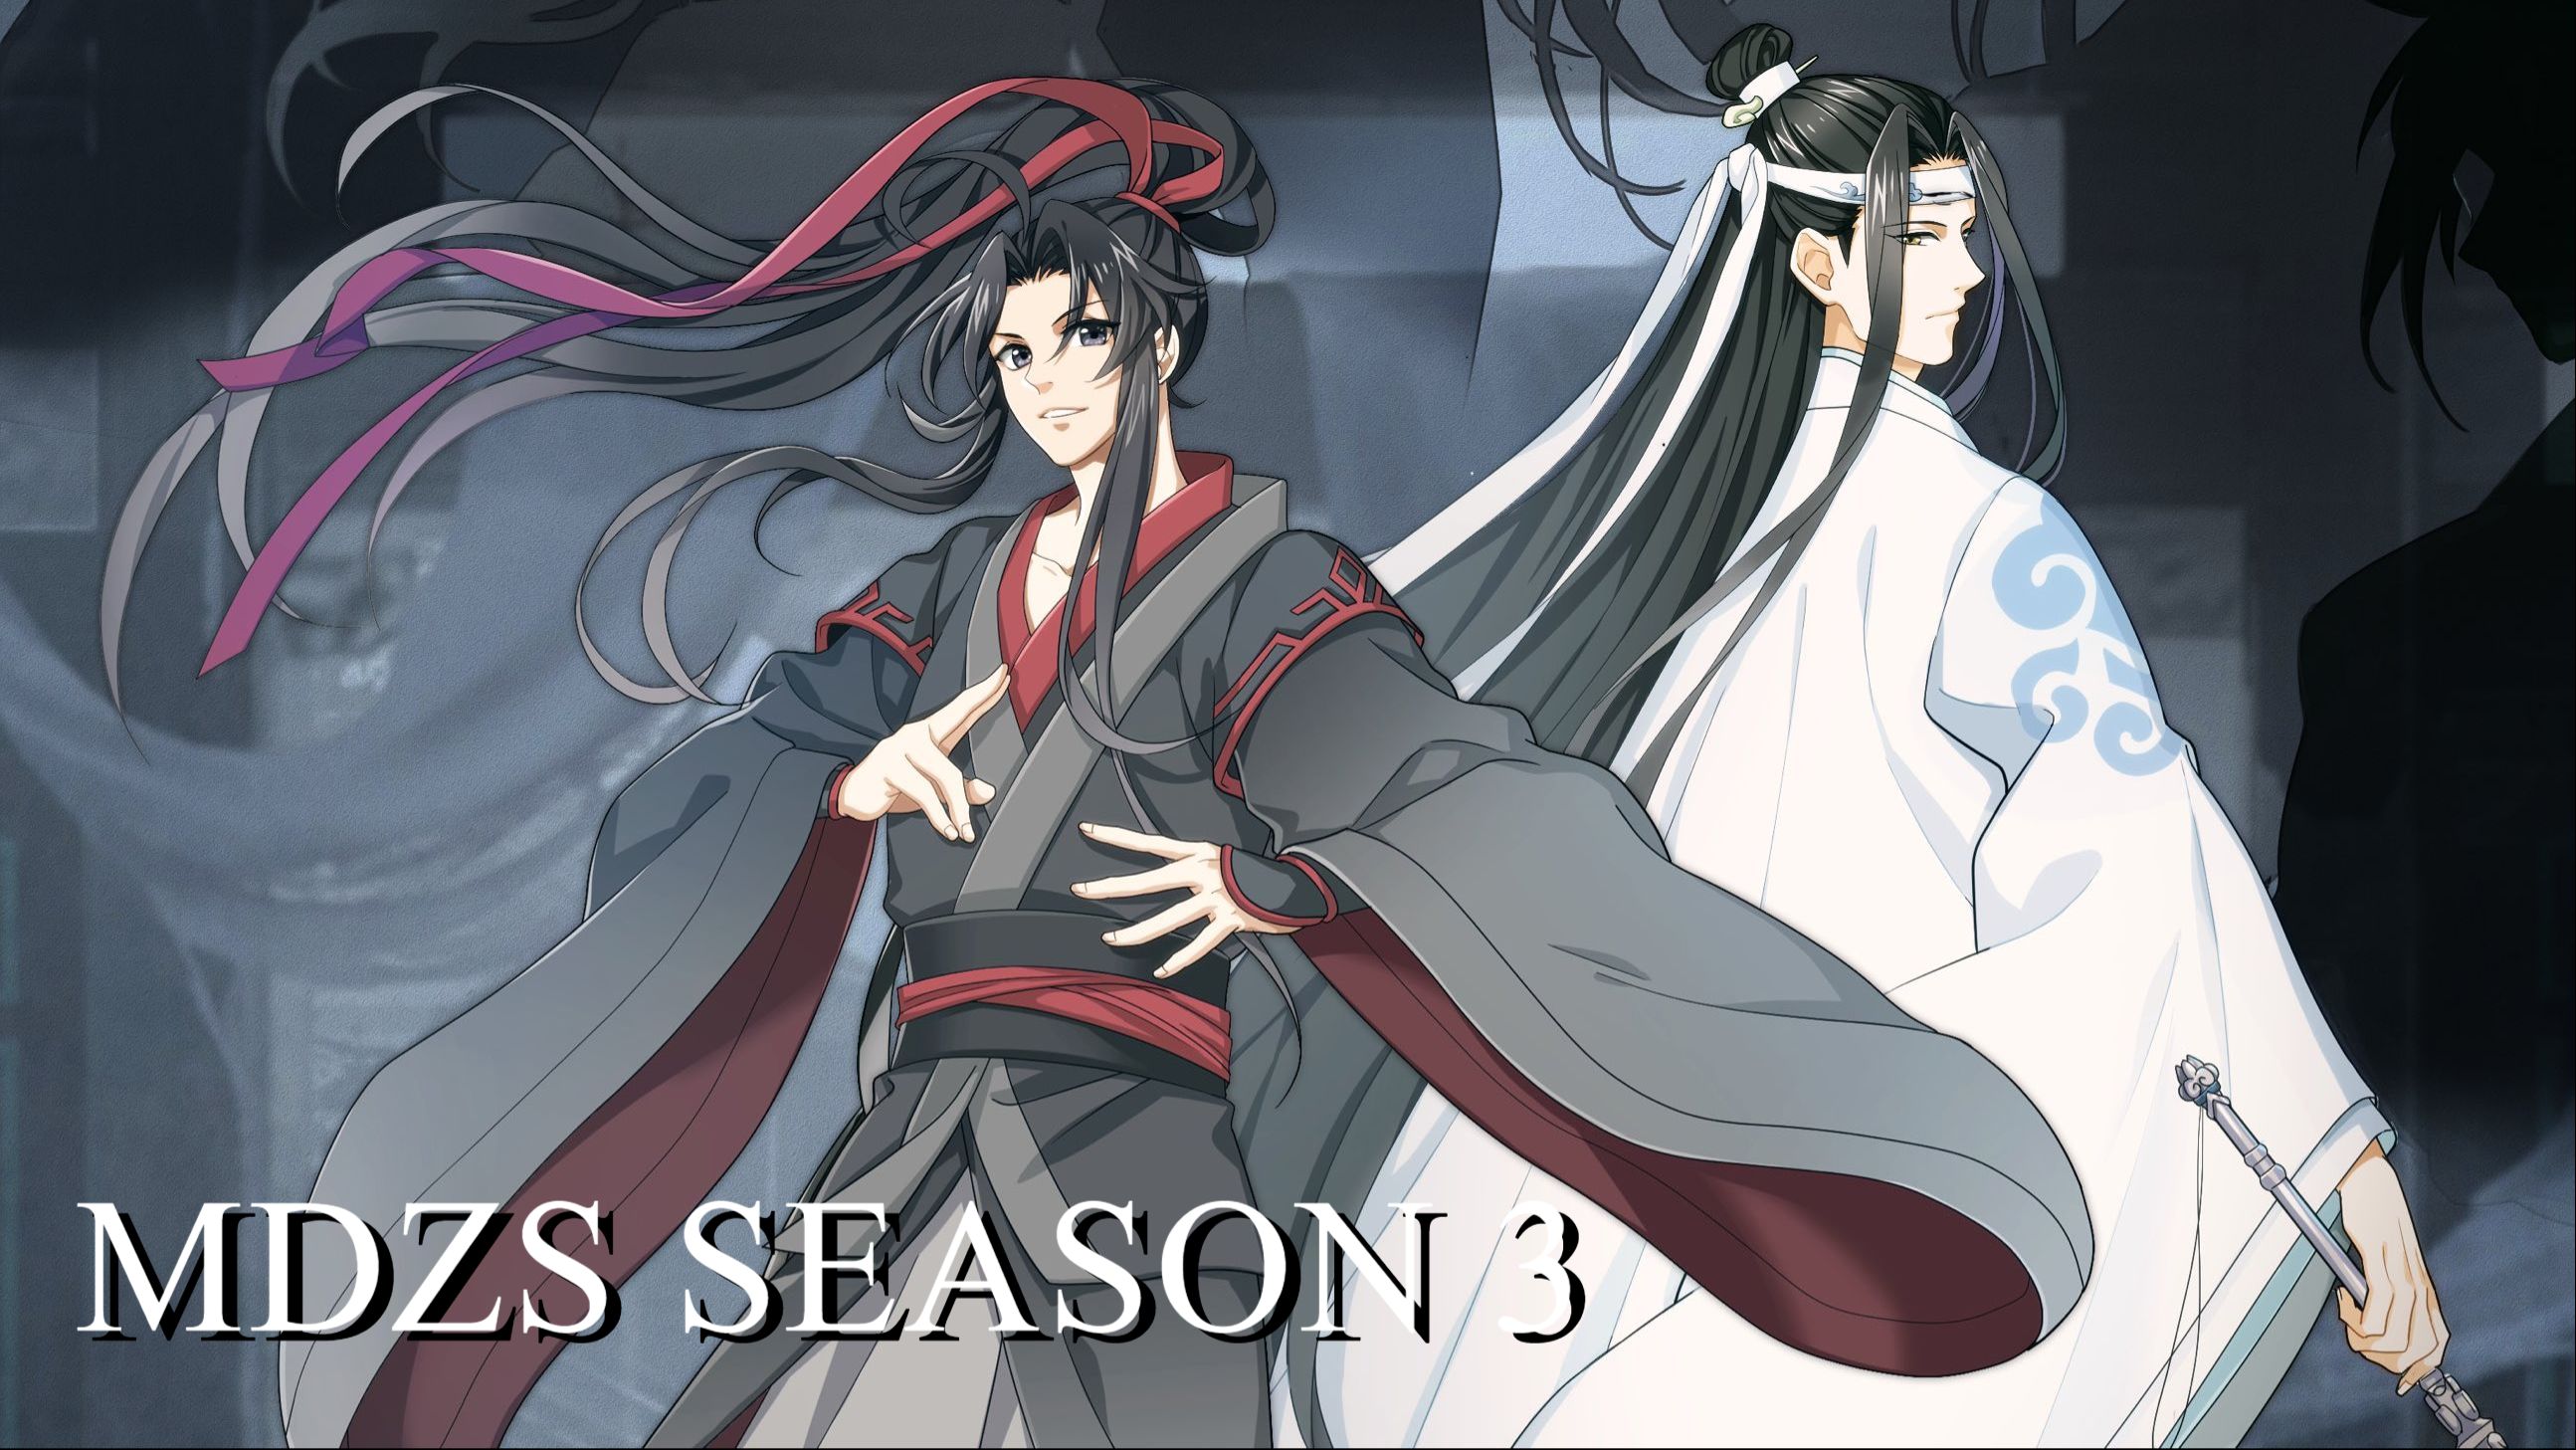 Grandmaster Of Demonic Cultivation / Mo Dao Zu Shi Season 3